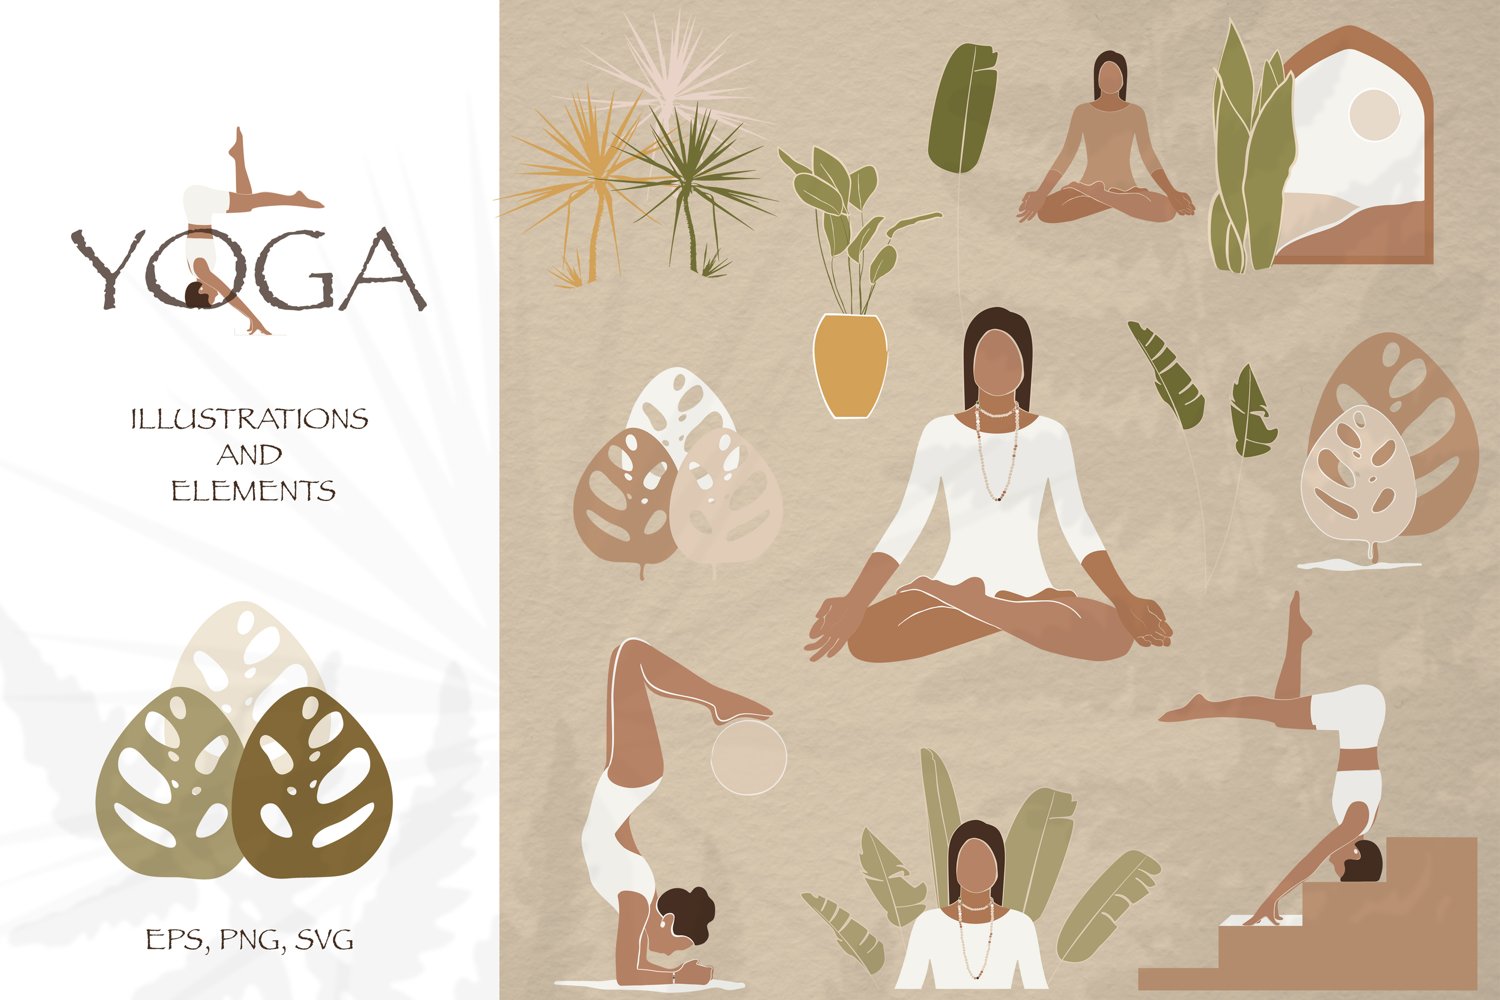 Yoga illustrations and elements.